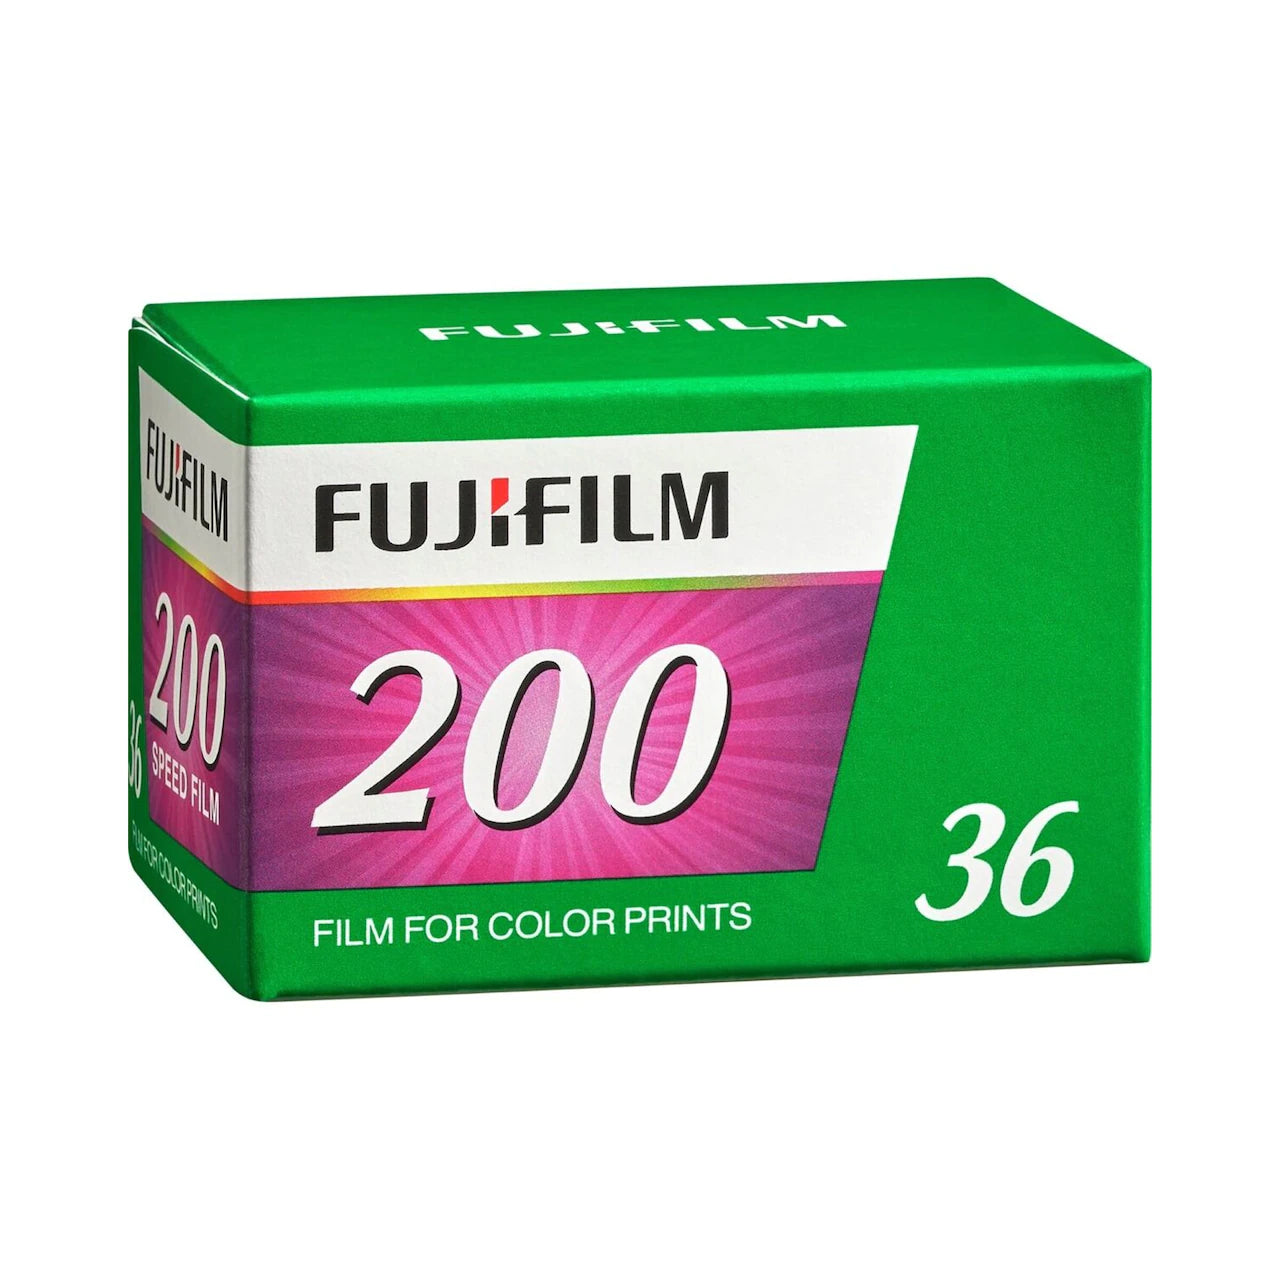 Fujifilm 36-bilder 200 ISO färgfilm